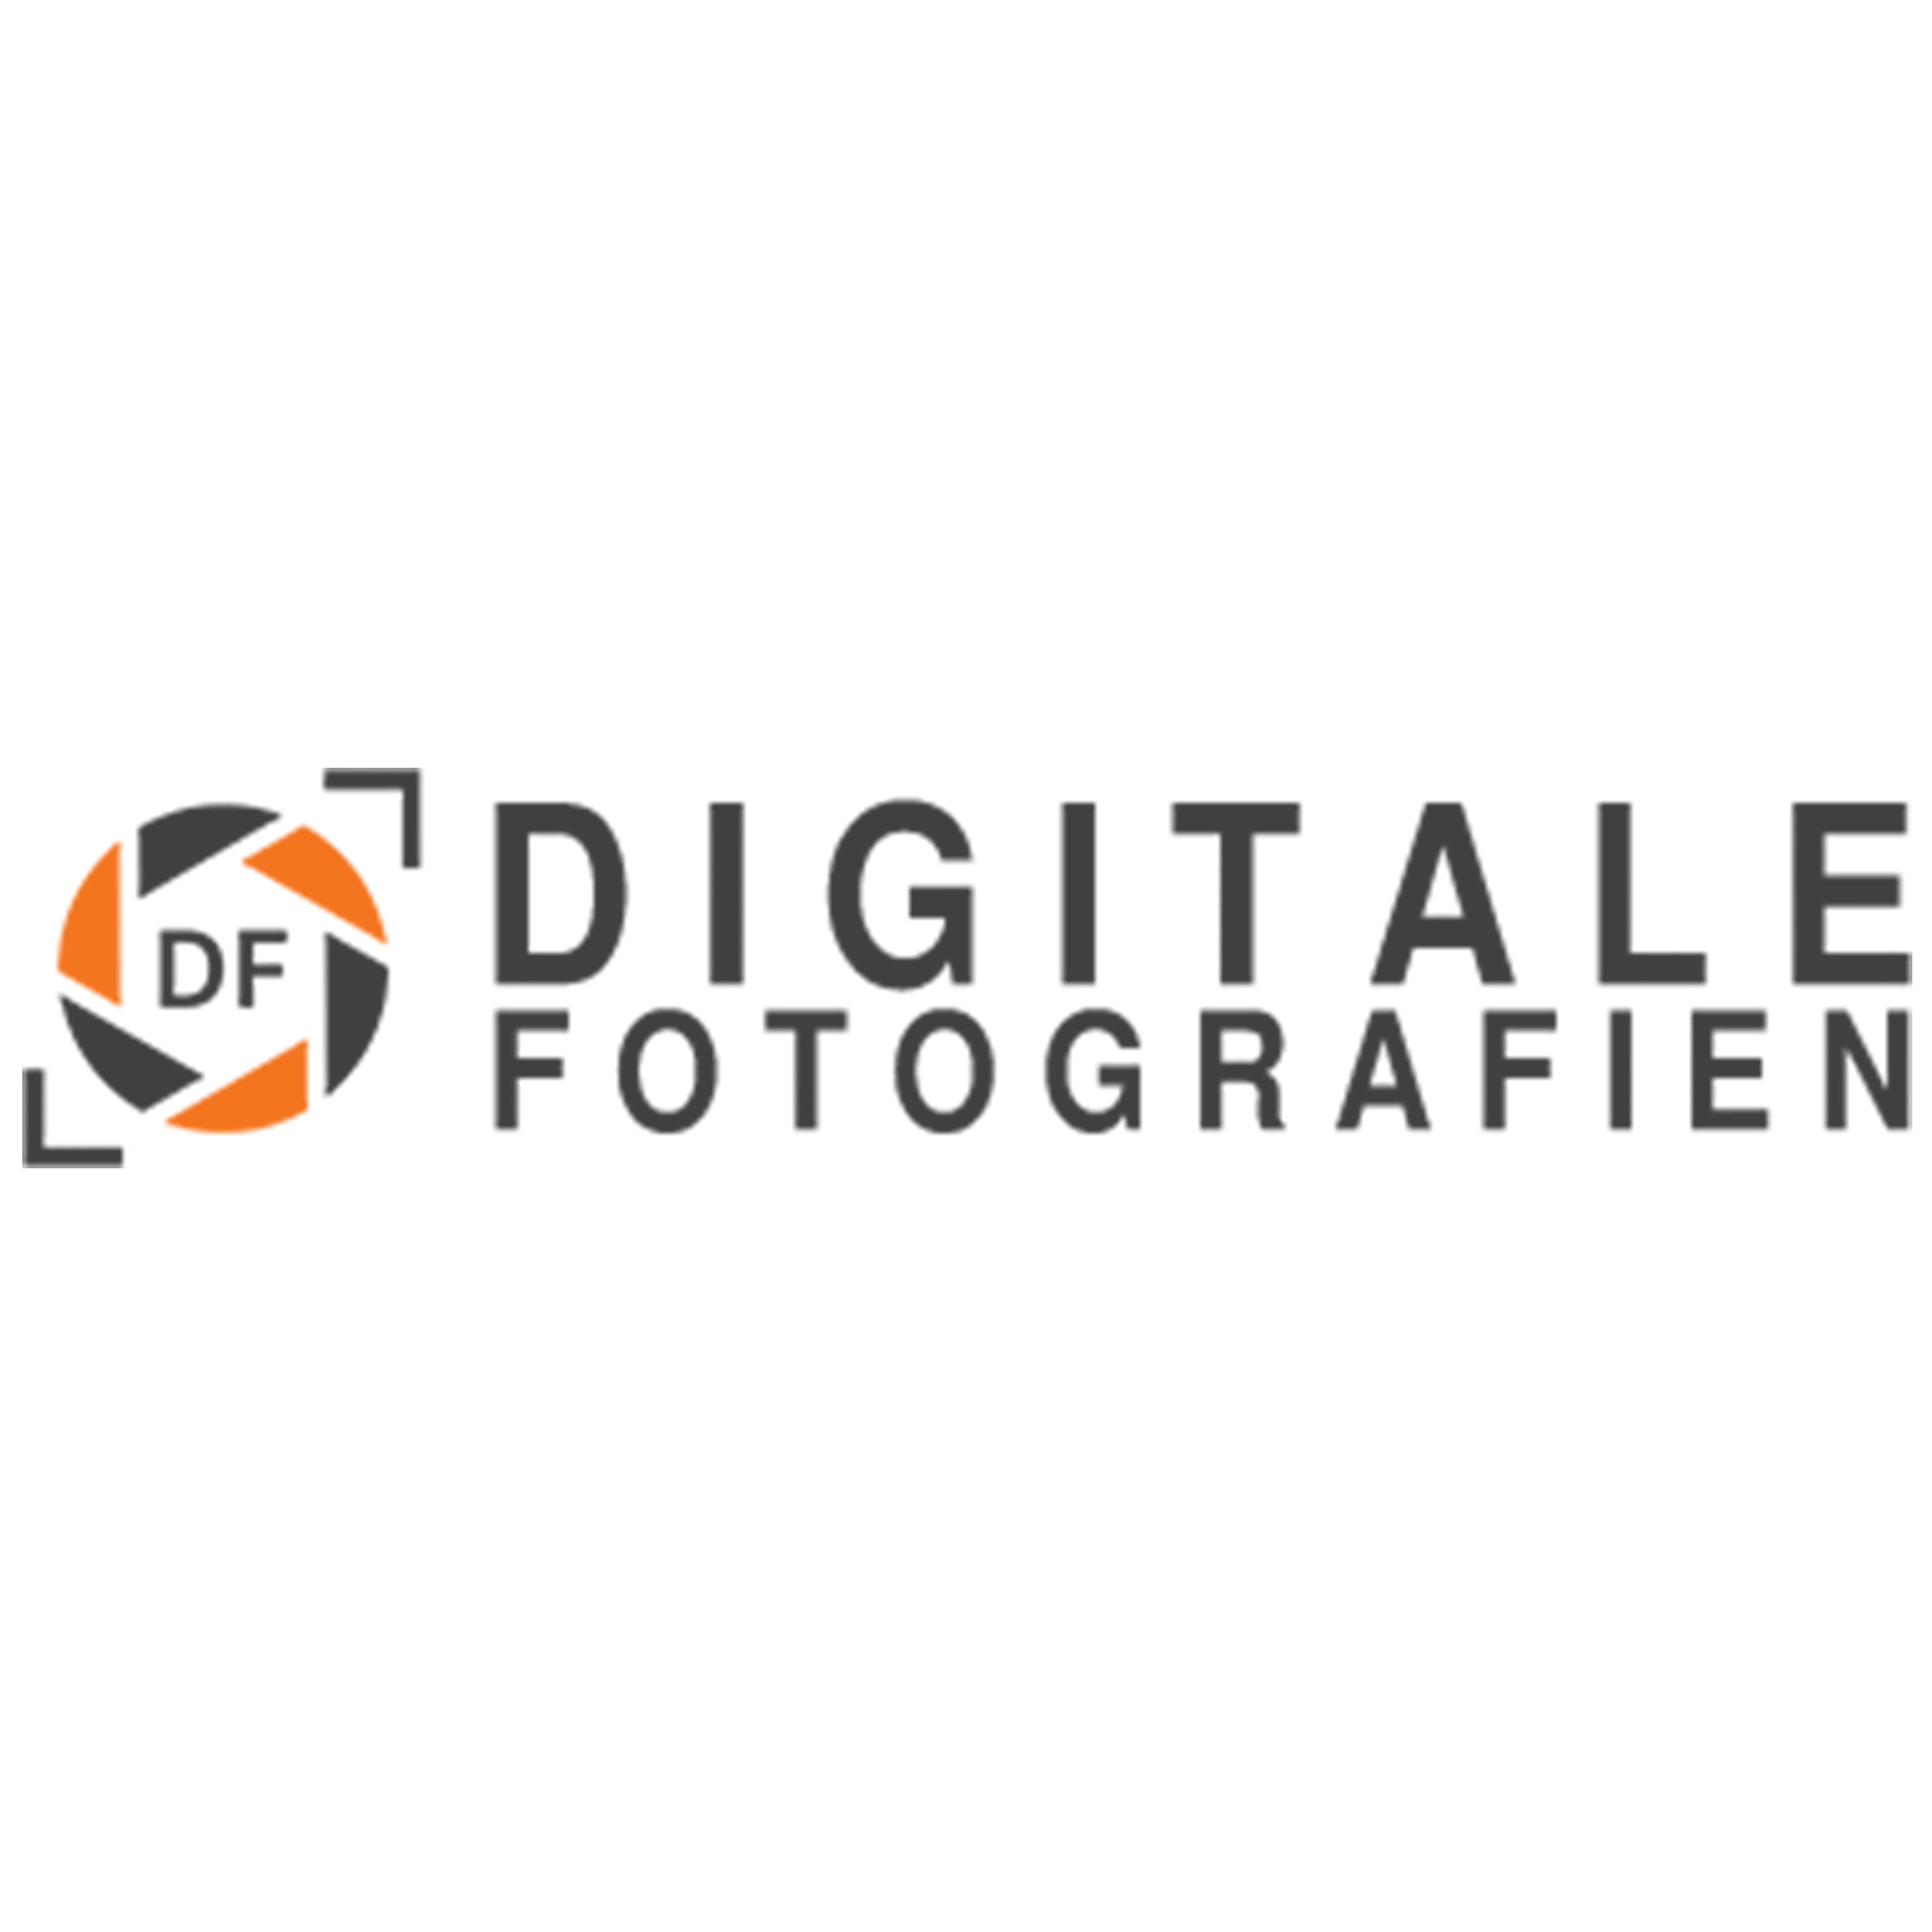 Digitale Fotografien - Foto und Film Produktion Logo